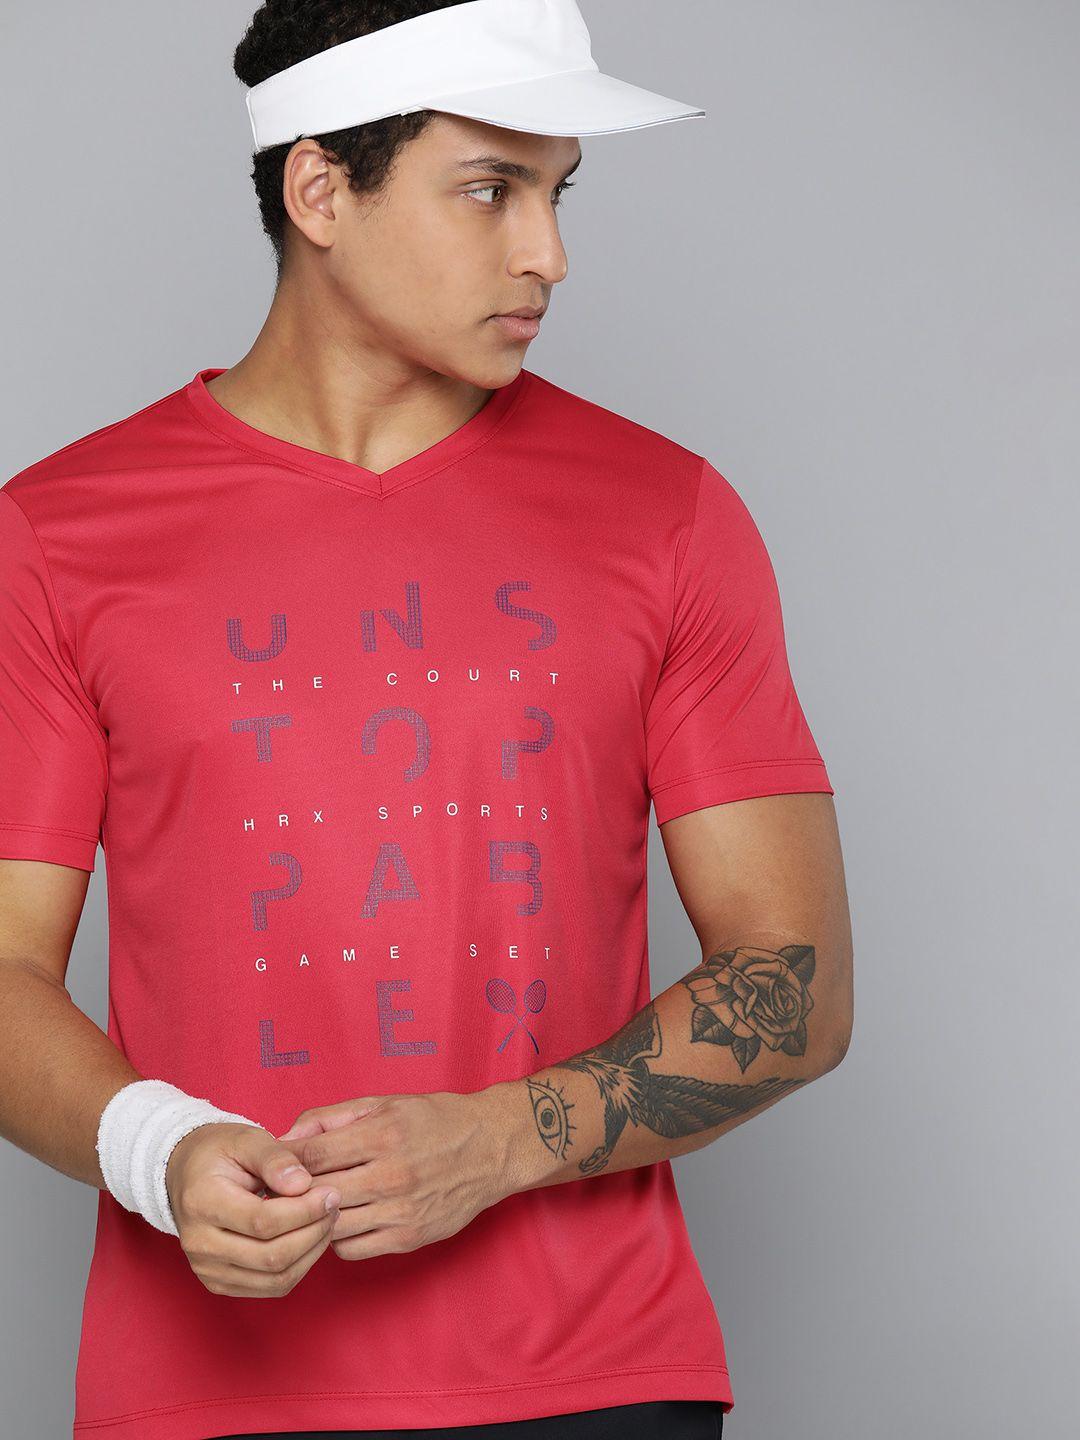 hrx-by-hrithik-roshan-rapid-dry-printed-racket-sport-t-shirt